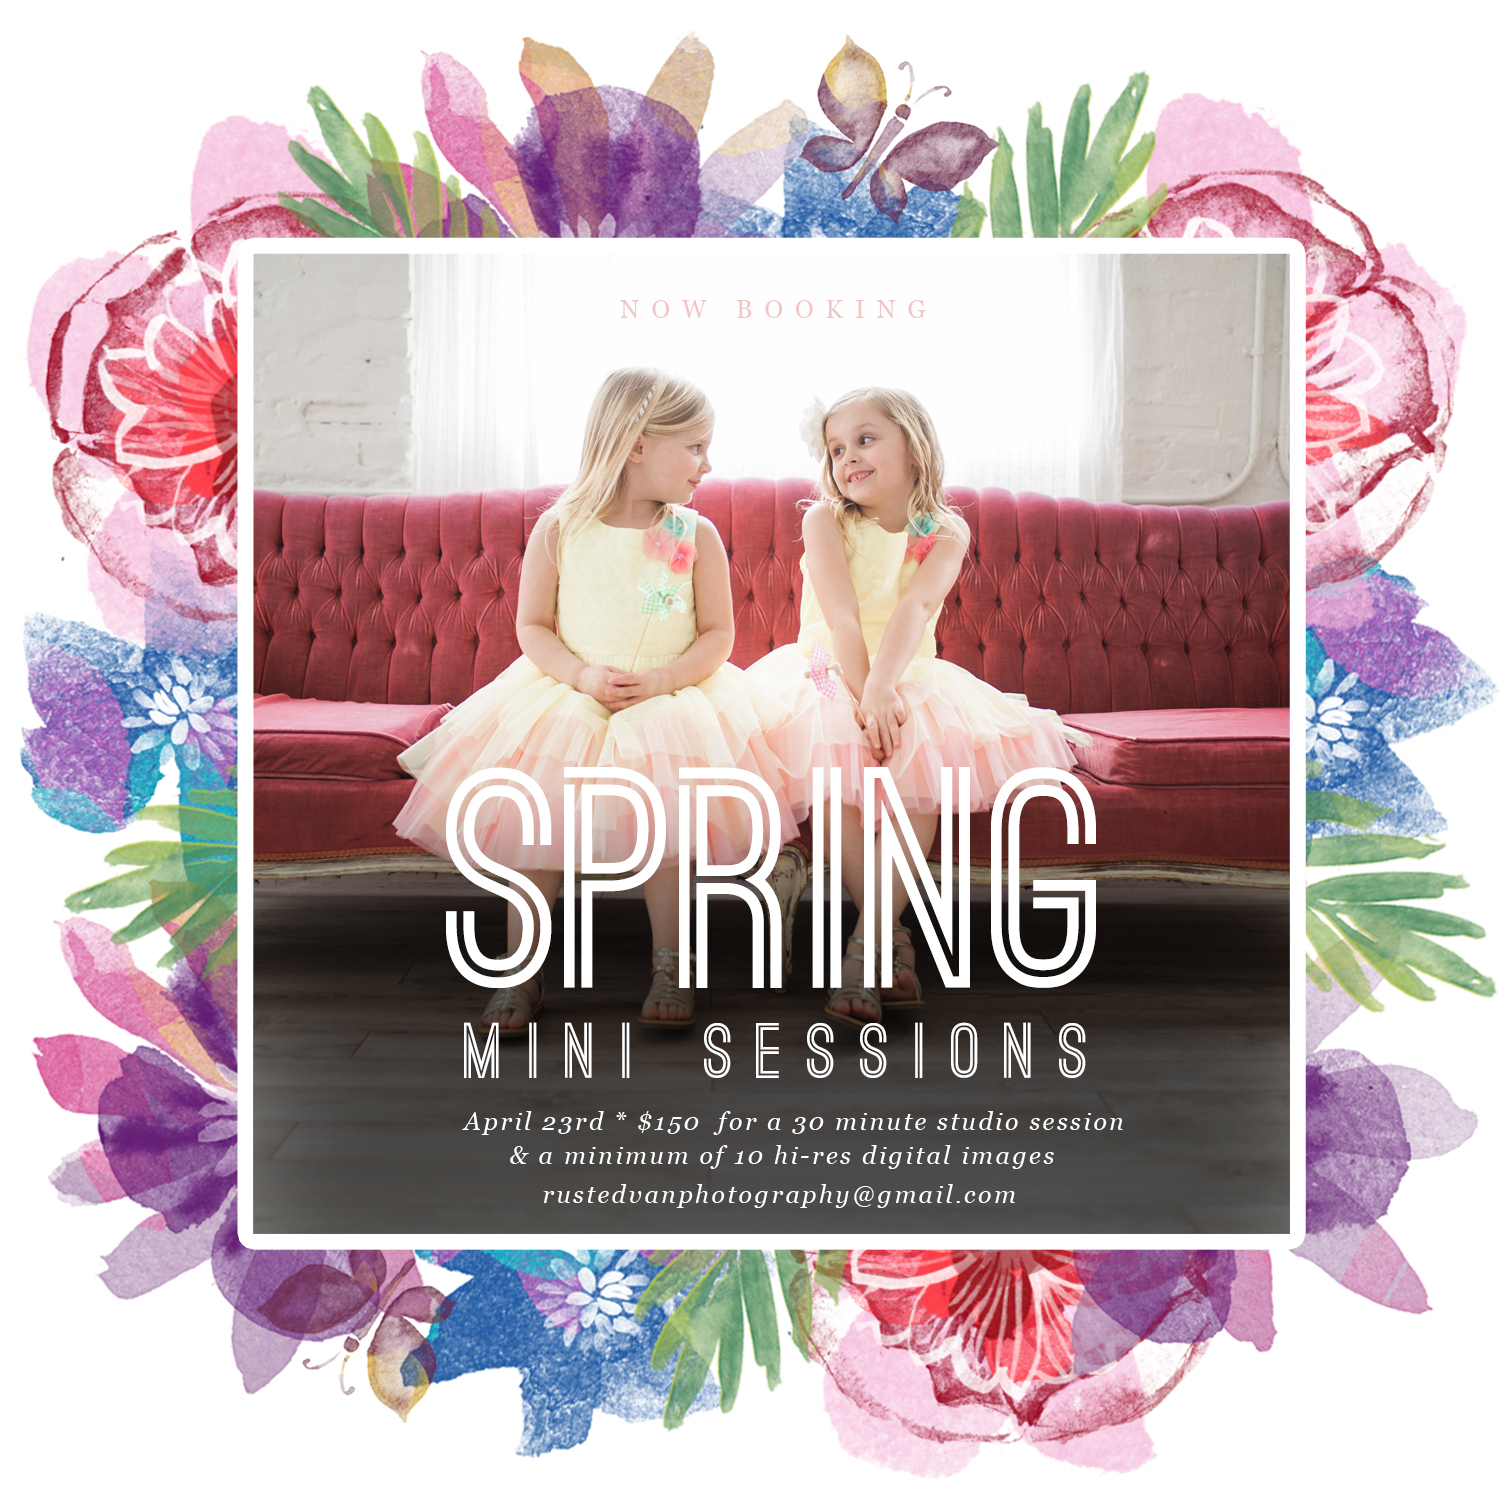 Spring Mini Sessions – Everett Studio Location